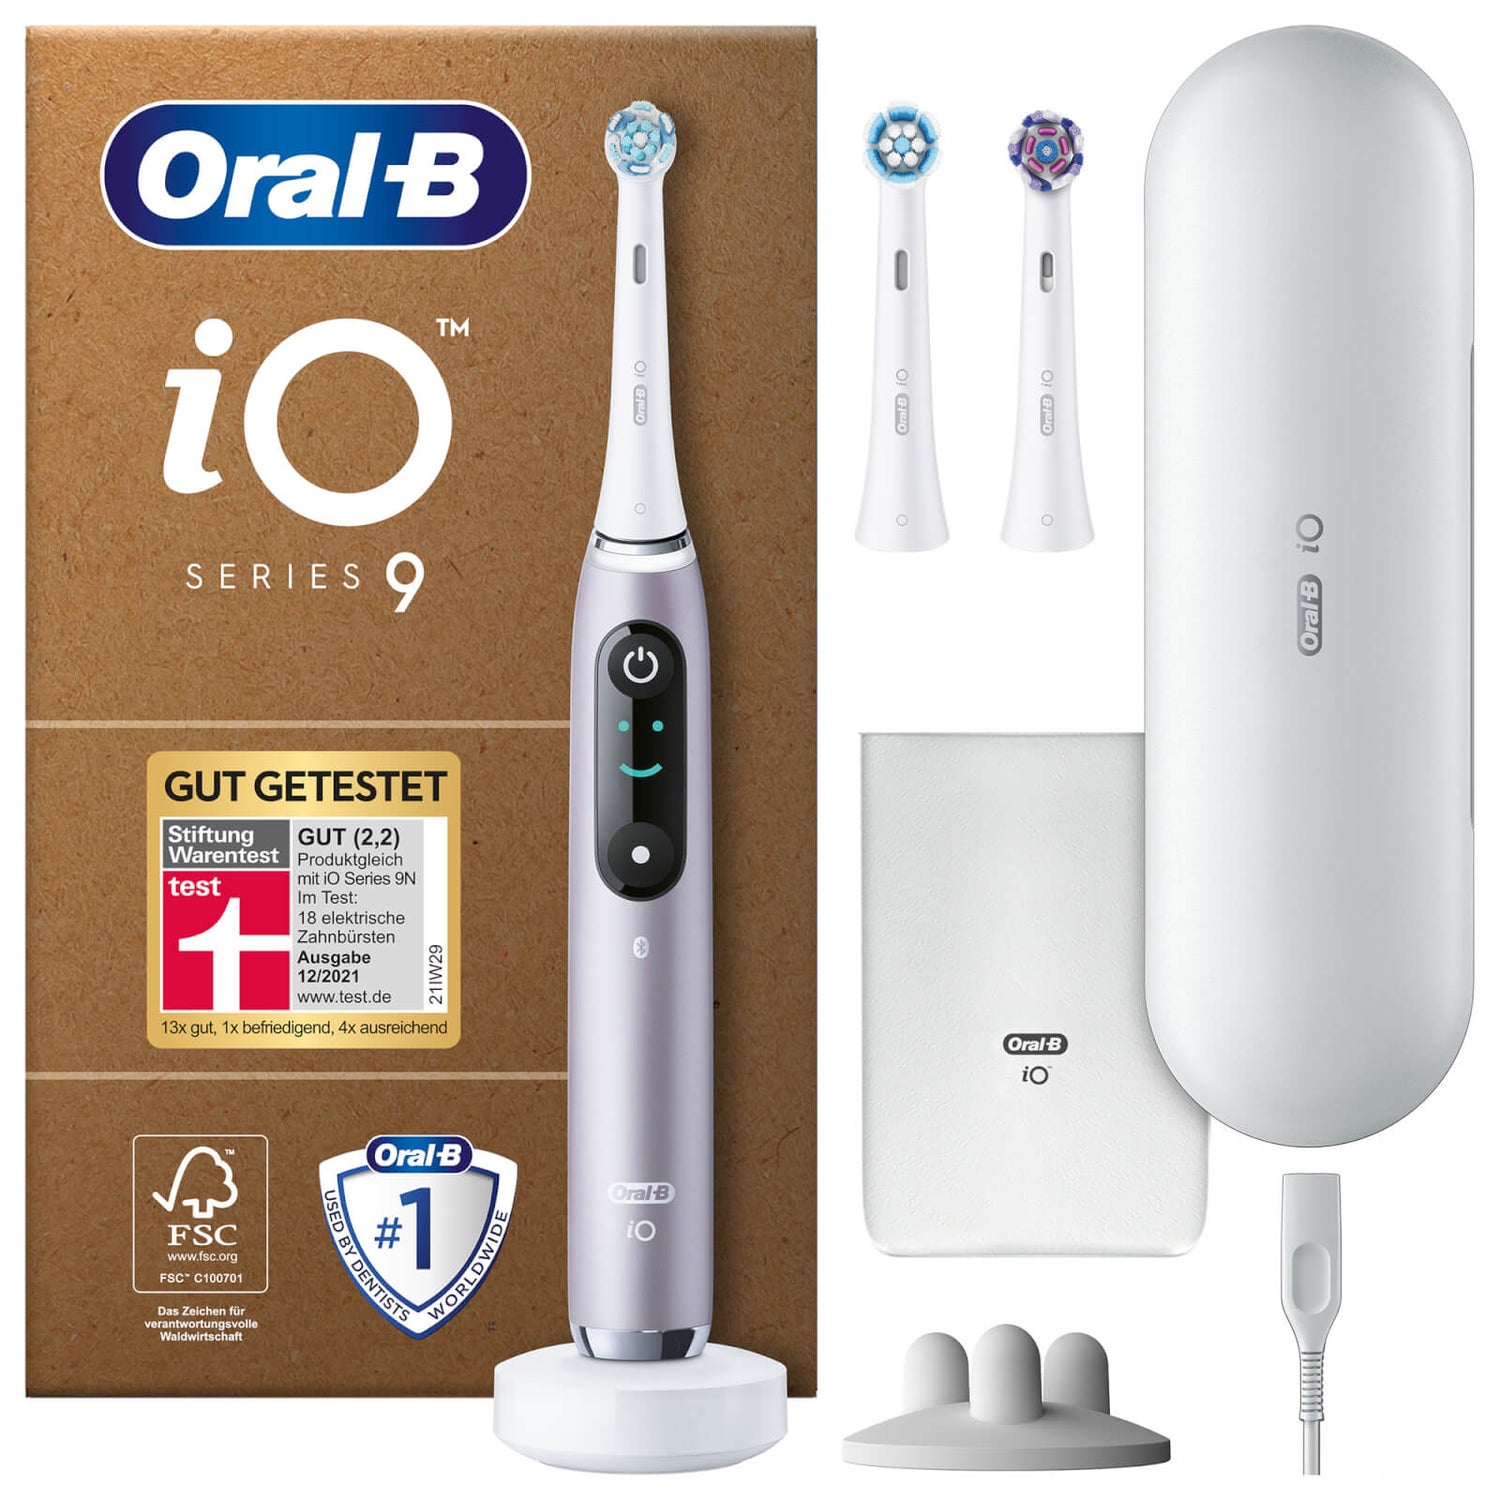 Oral-B iO Series 9 Plus Edition Elektrische Zahnbürste, Lade-Reiseetui, recycelbare Verpackung, Rose Quartz